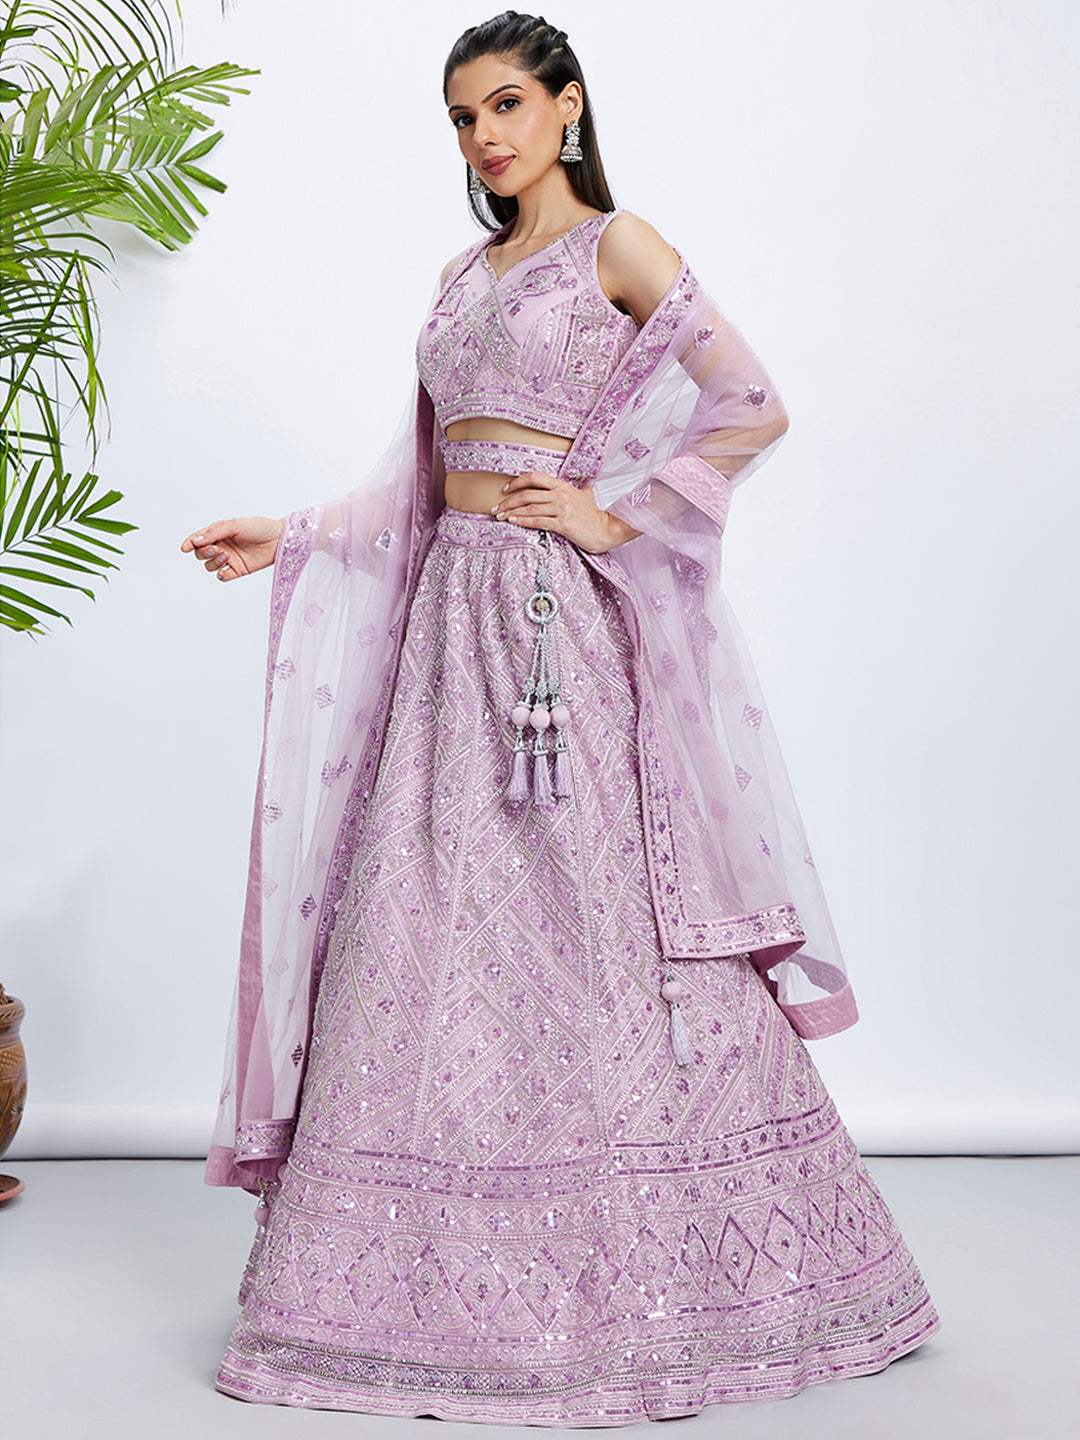 Lavender Blush-Colored Lehenga With Net Dupata : Timeless Elegance for Every Celebration